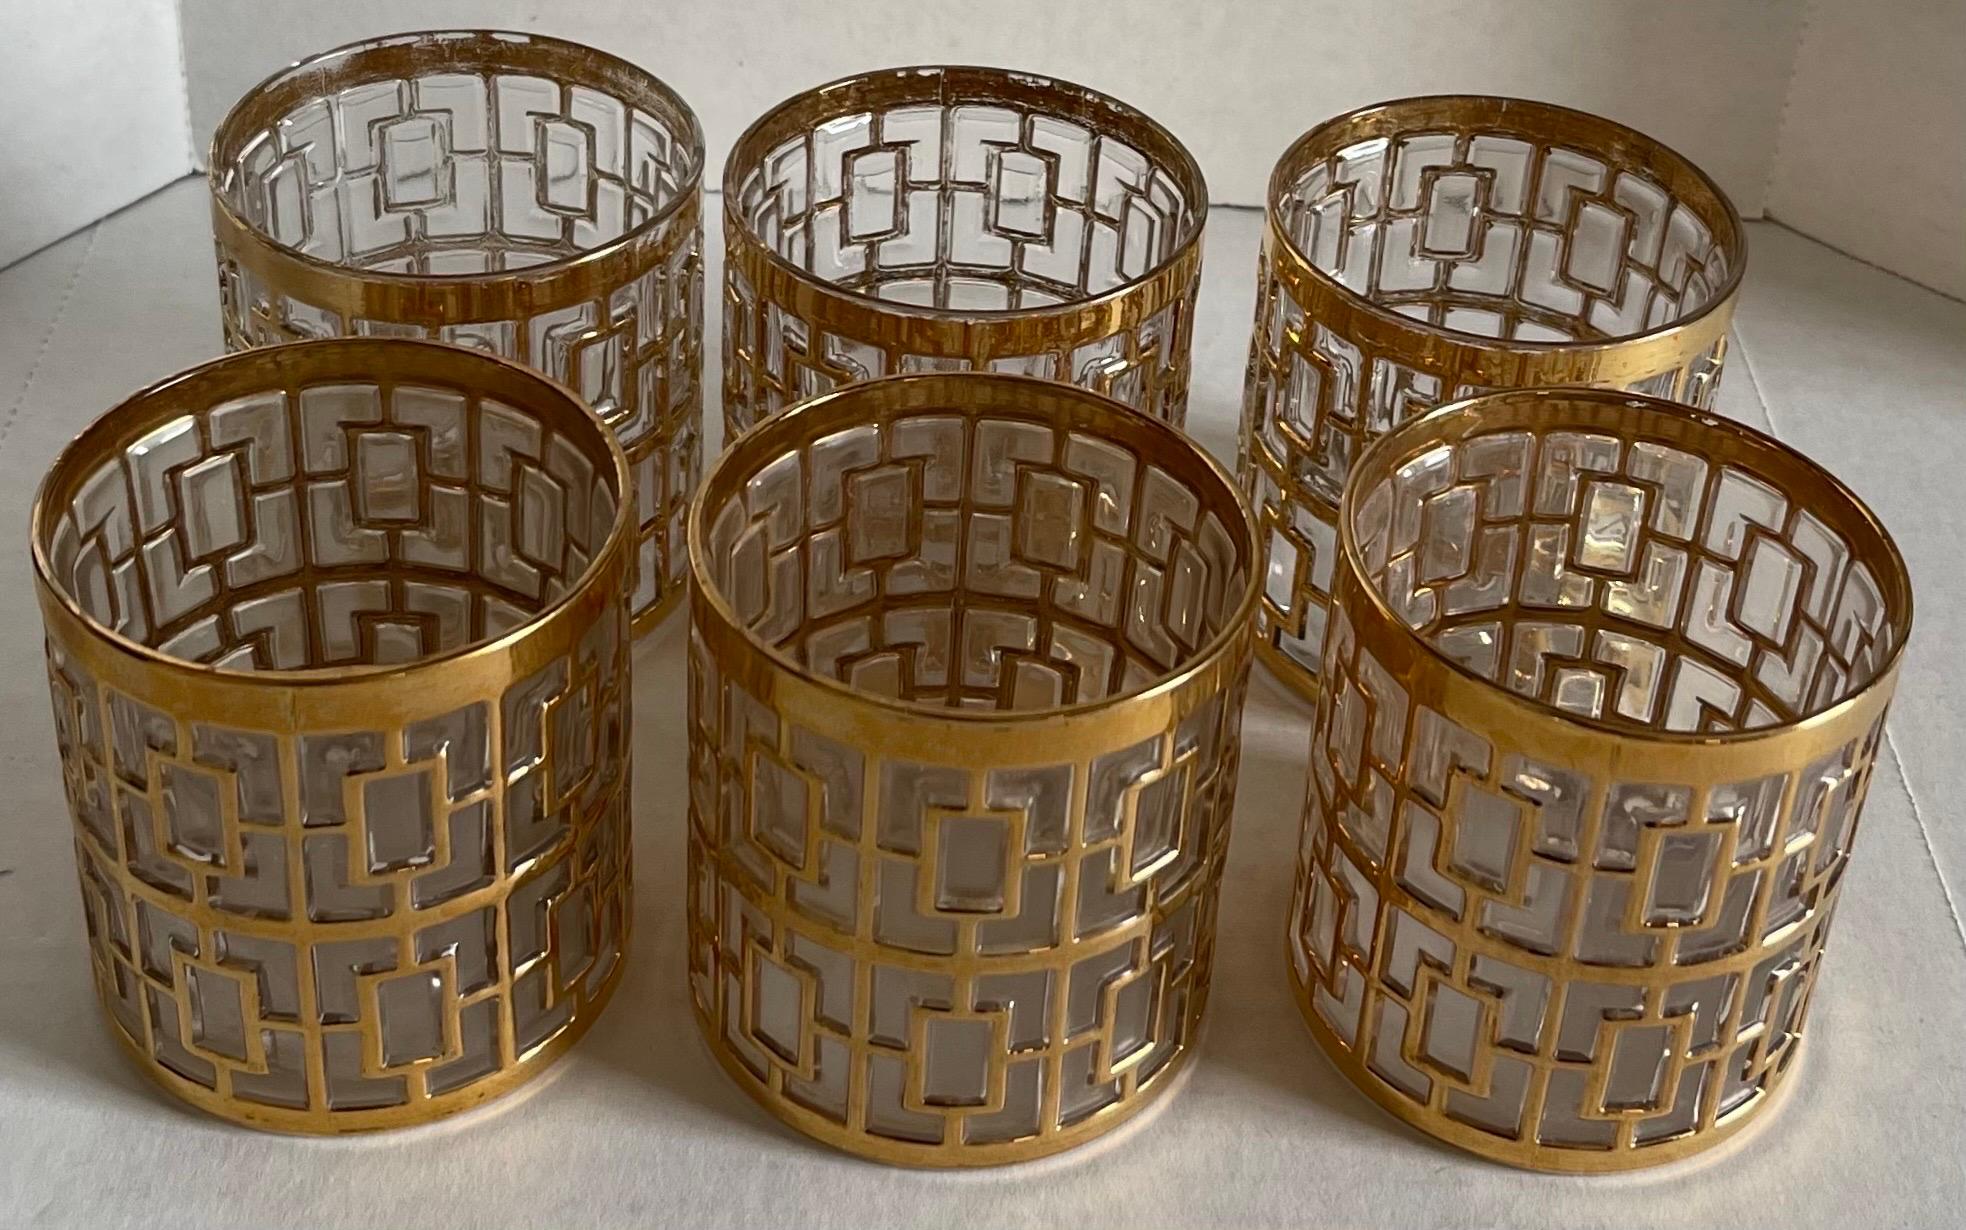 Set of 6 Imperial Shoji small saki glasses. Overall raised geometric design with 22-karat gold. Each glass measures 2.75